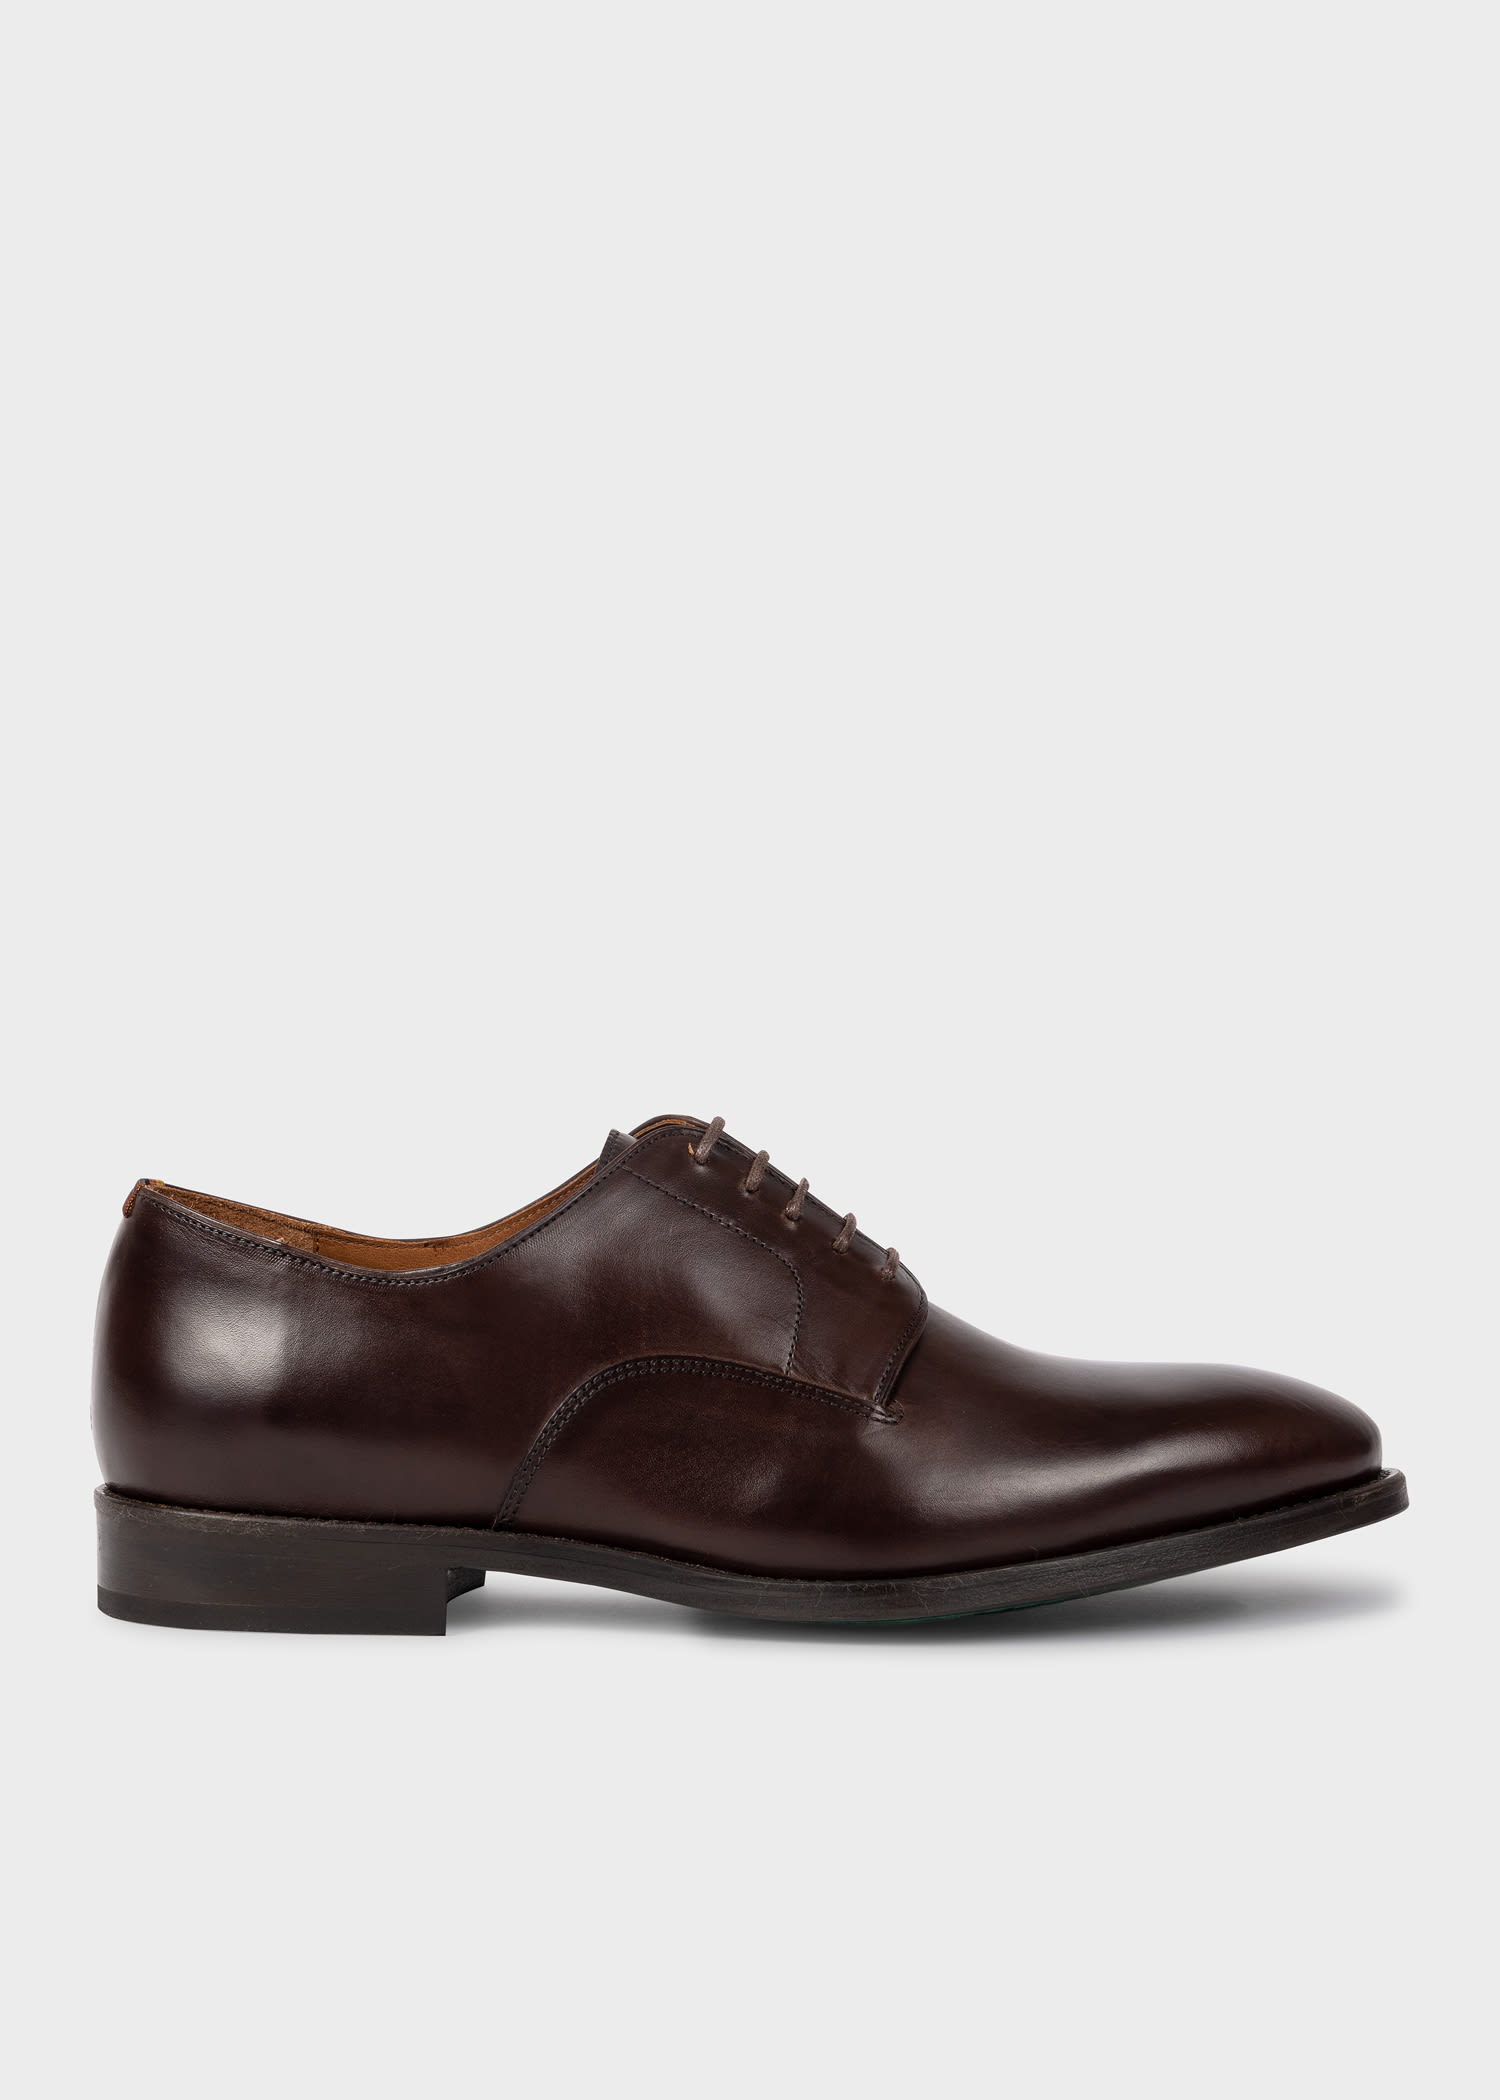 Men's Brown Leather 'Fes' Shoes